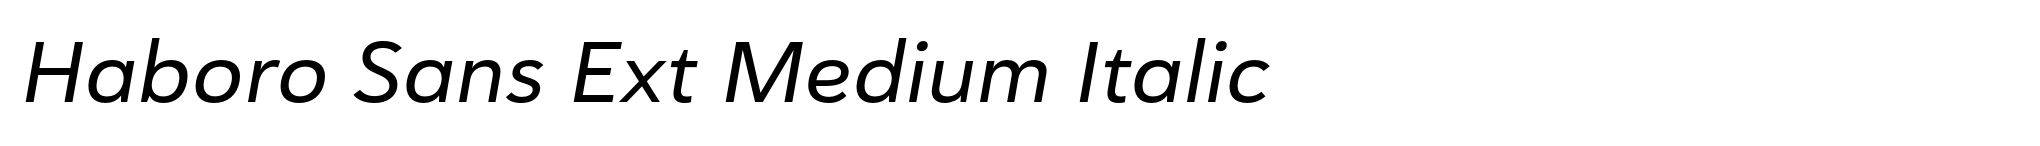 Haboro Sans Ext Medium Italic image